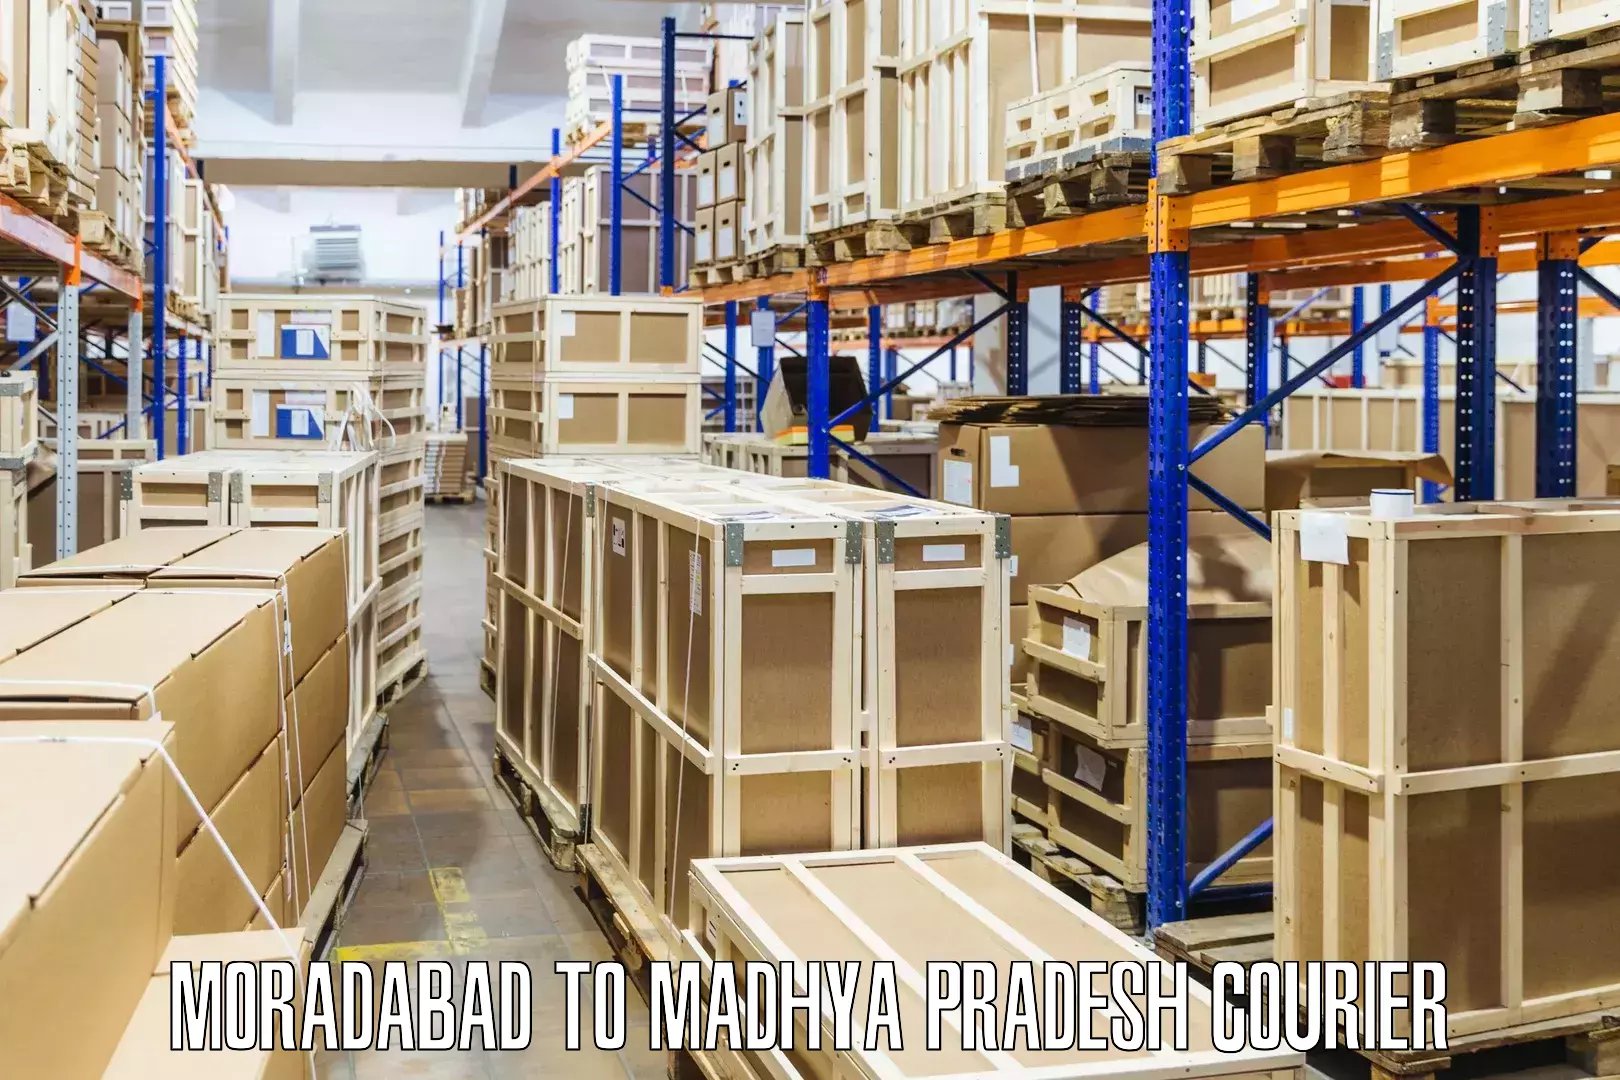 Courier service efficiency Moradabad to Silwani